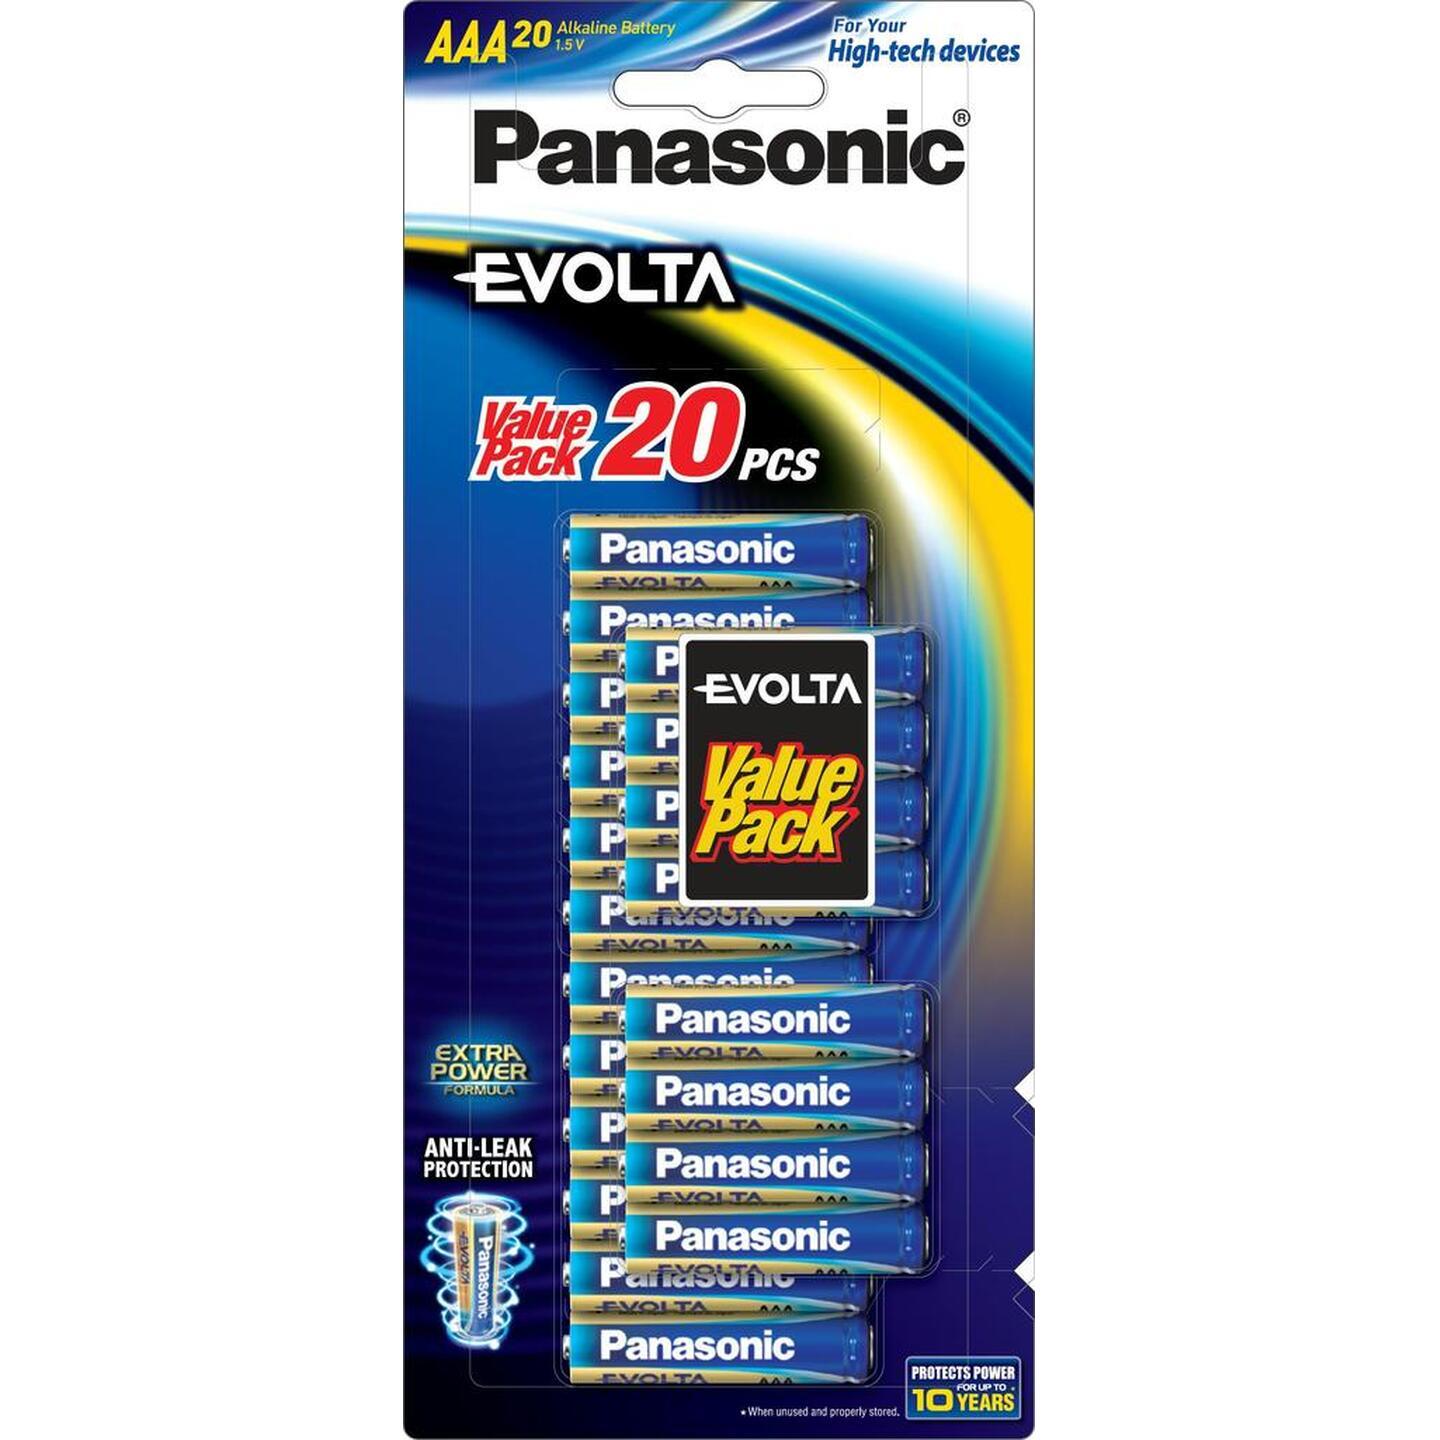 Panasonic Evolta AAA Batteries - 20 Pack